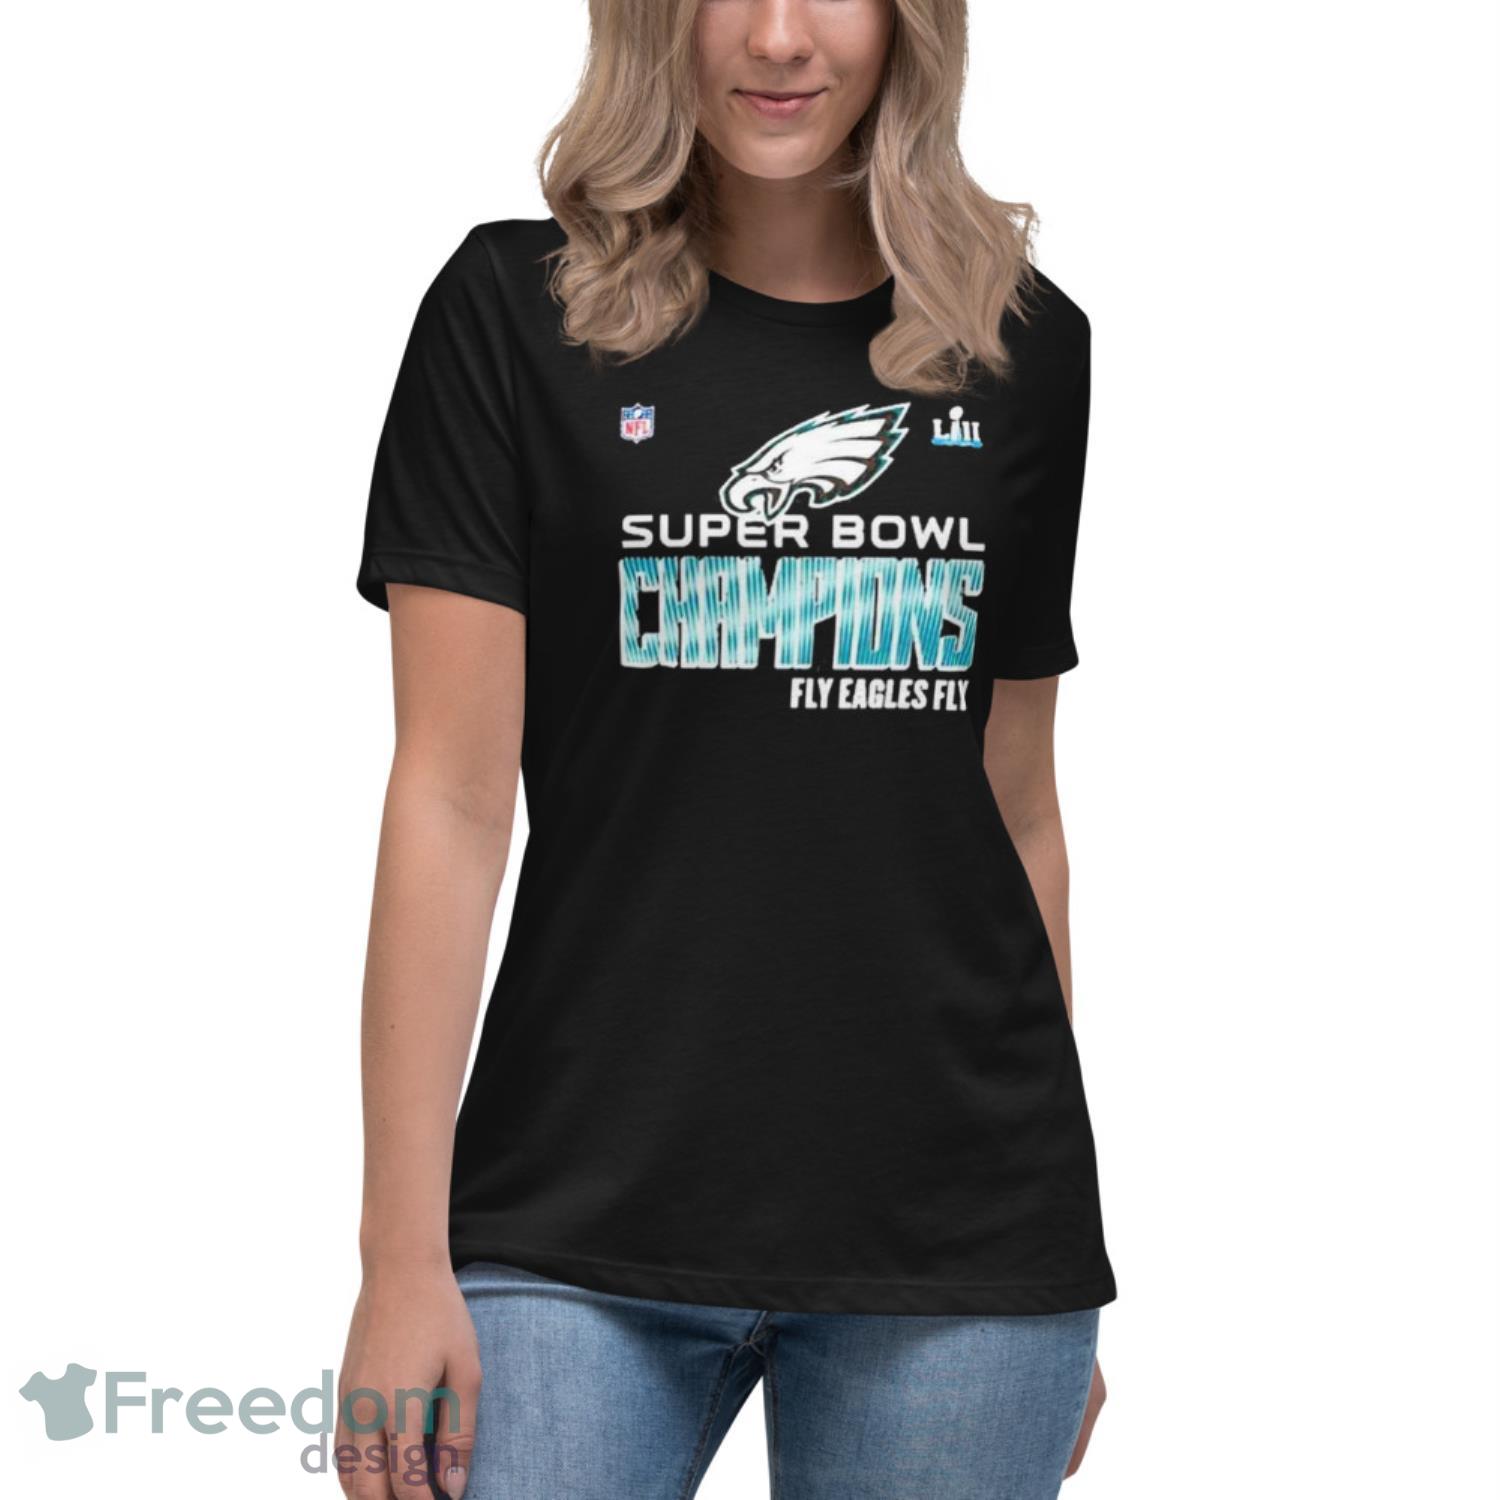 NFL philadelphia eagles super bowl champions T Shirt - Freedomdesign